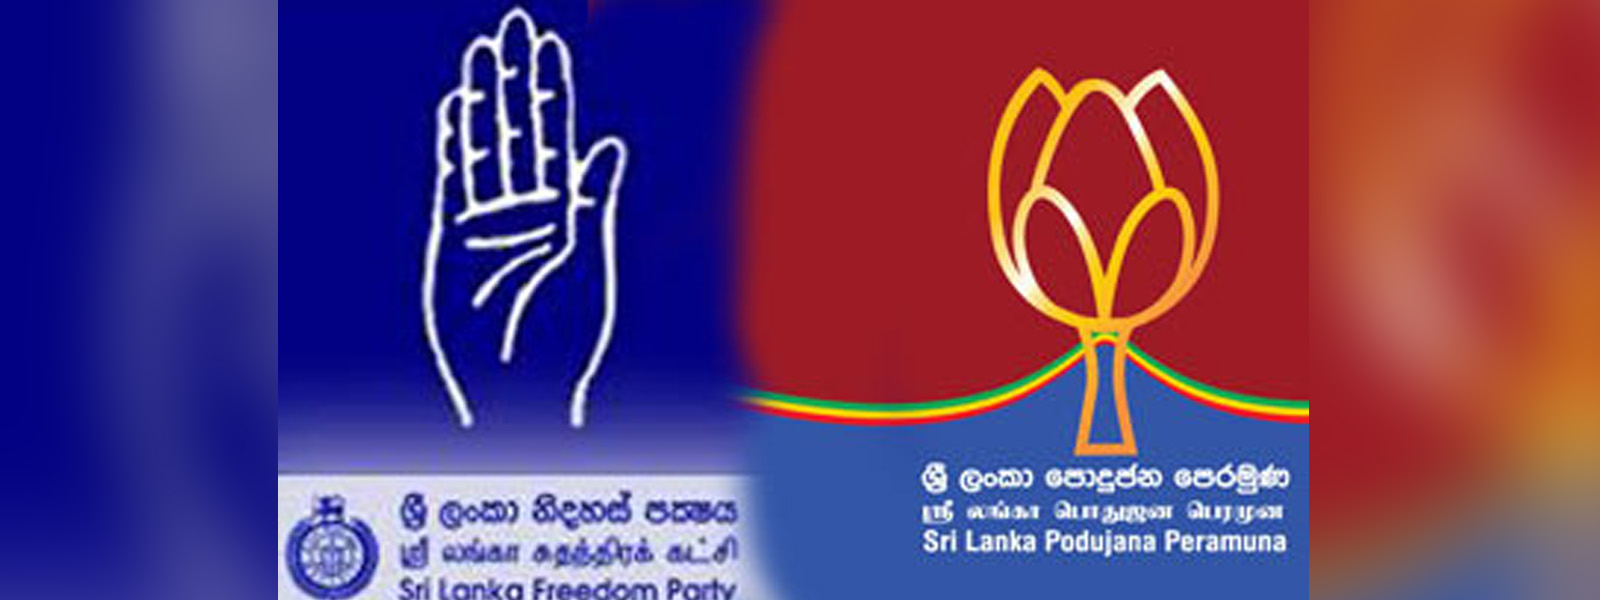 SLFP to support Gotabaya Rajapaksa